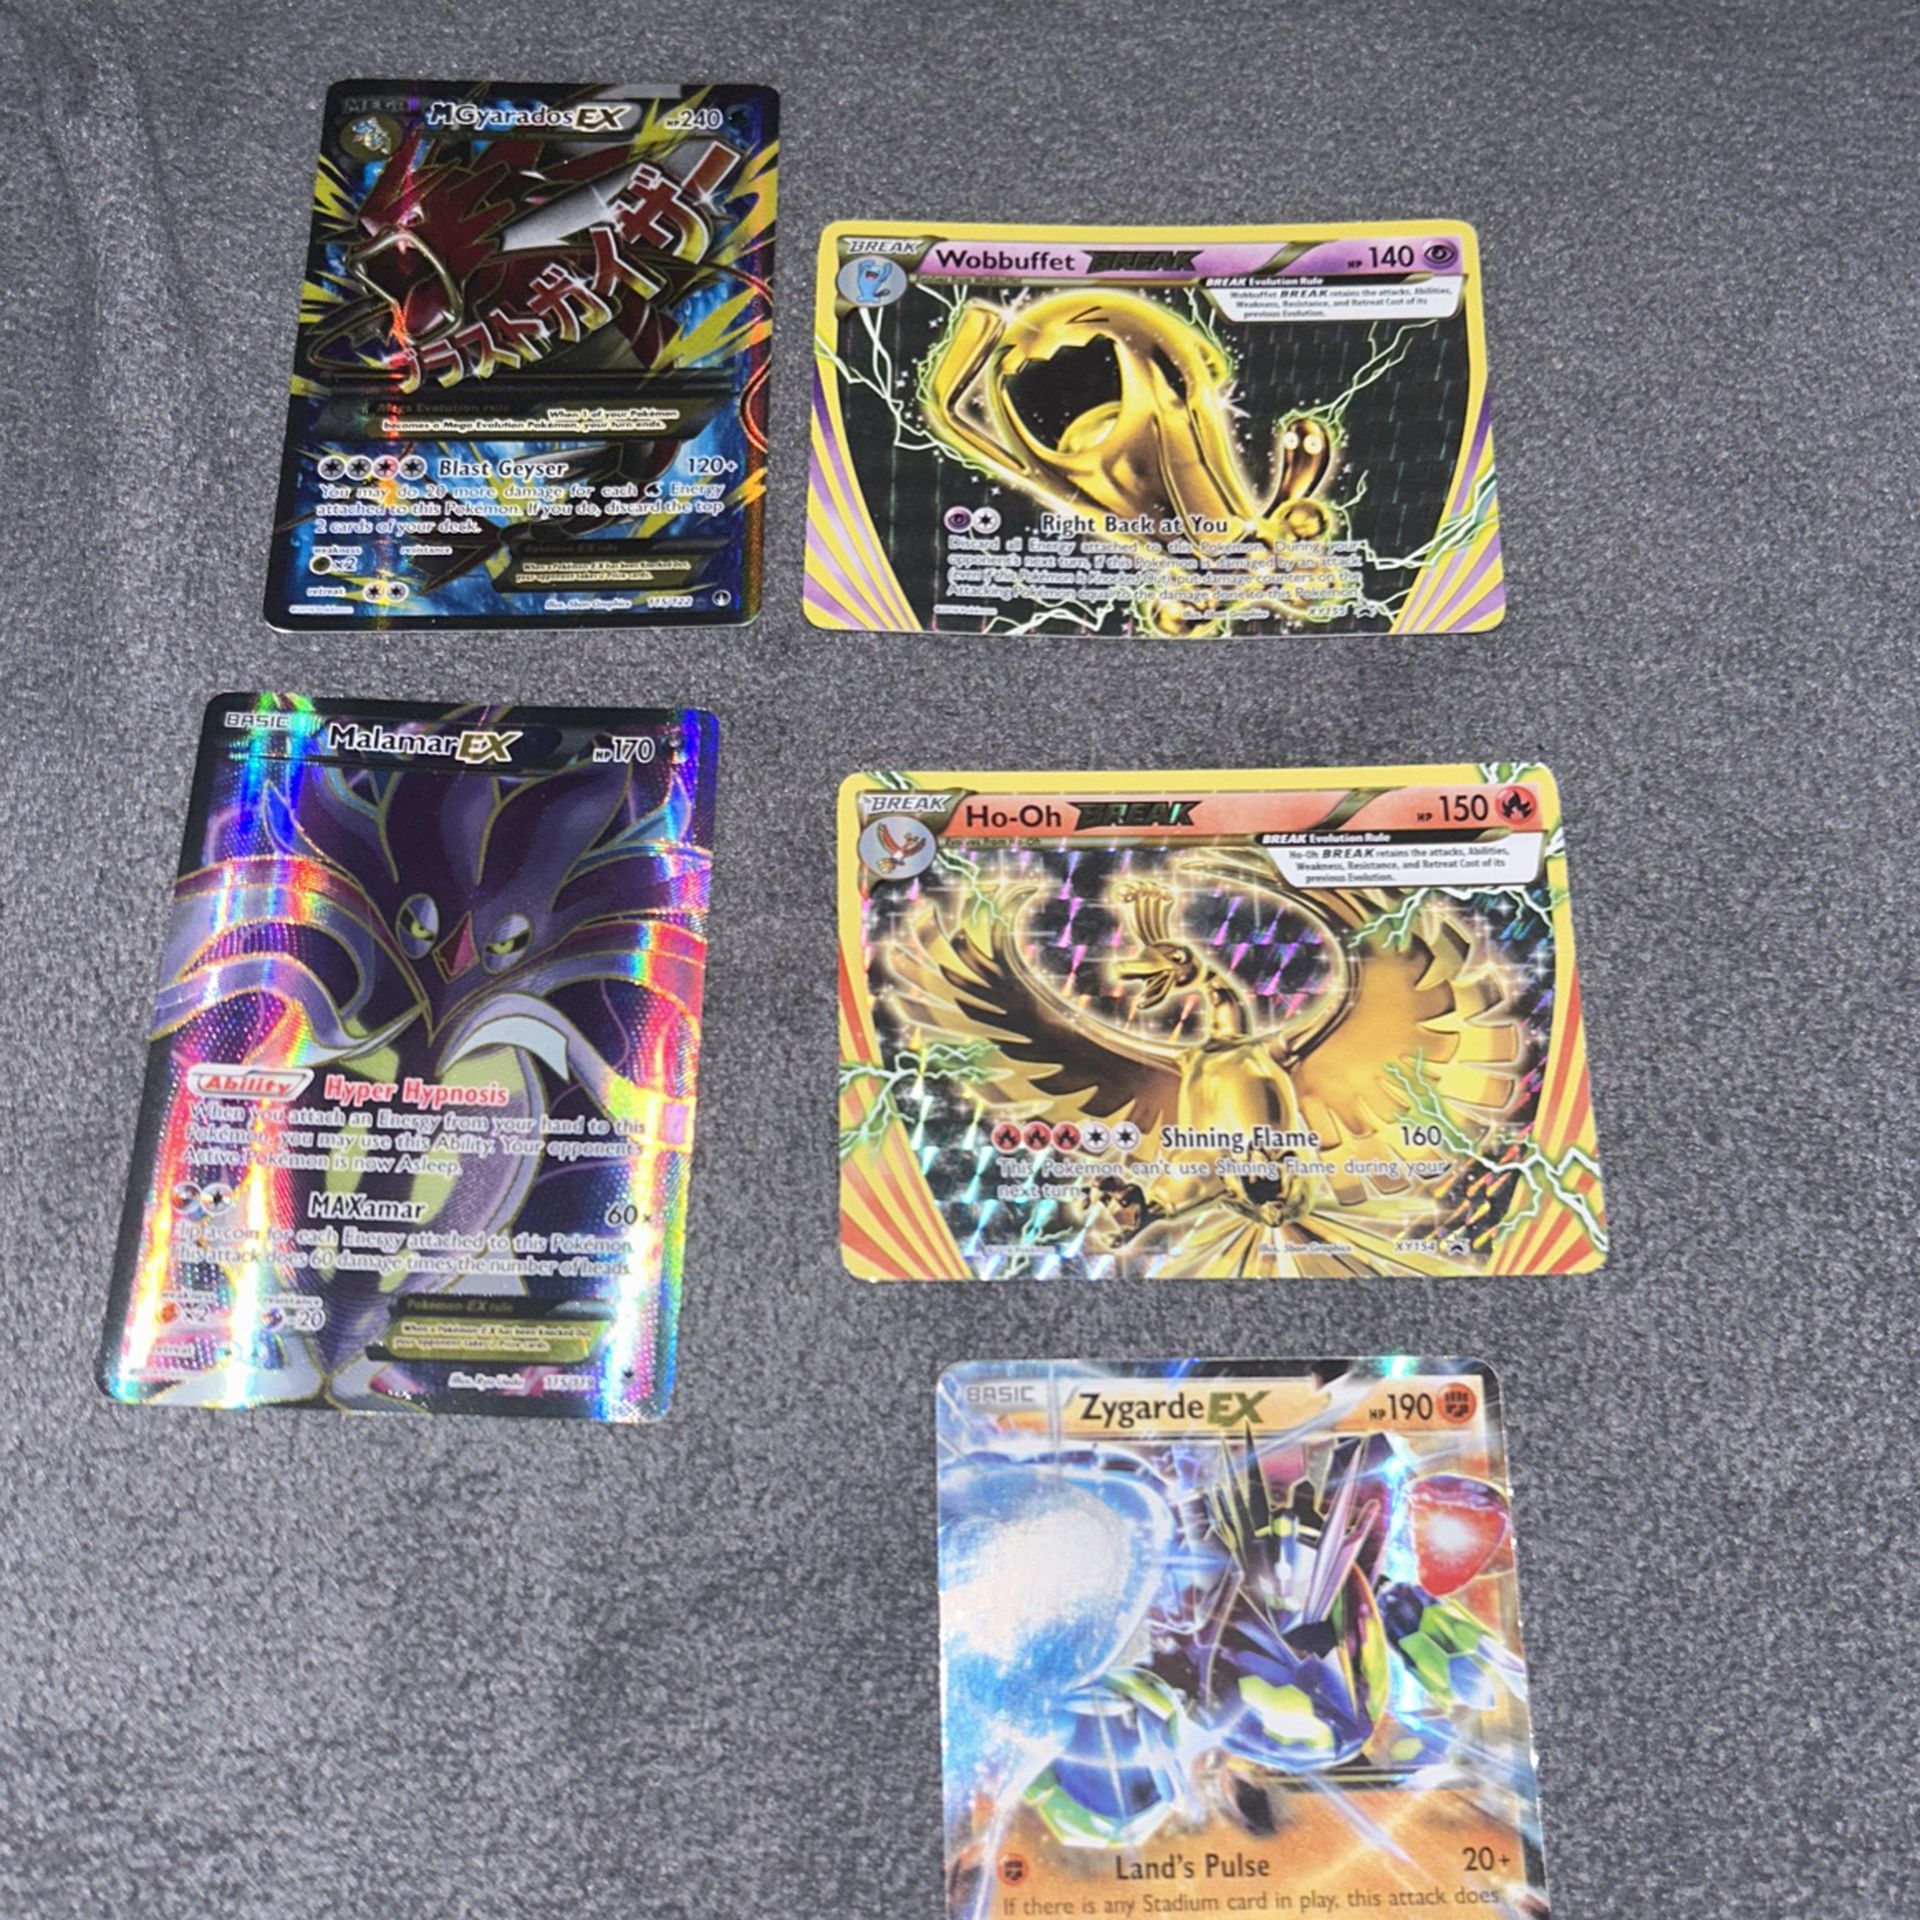 Rare Pokemon Cards 